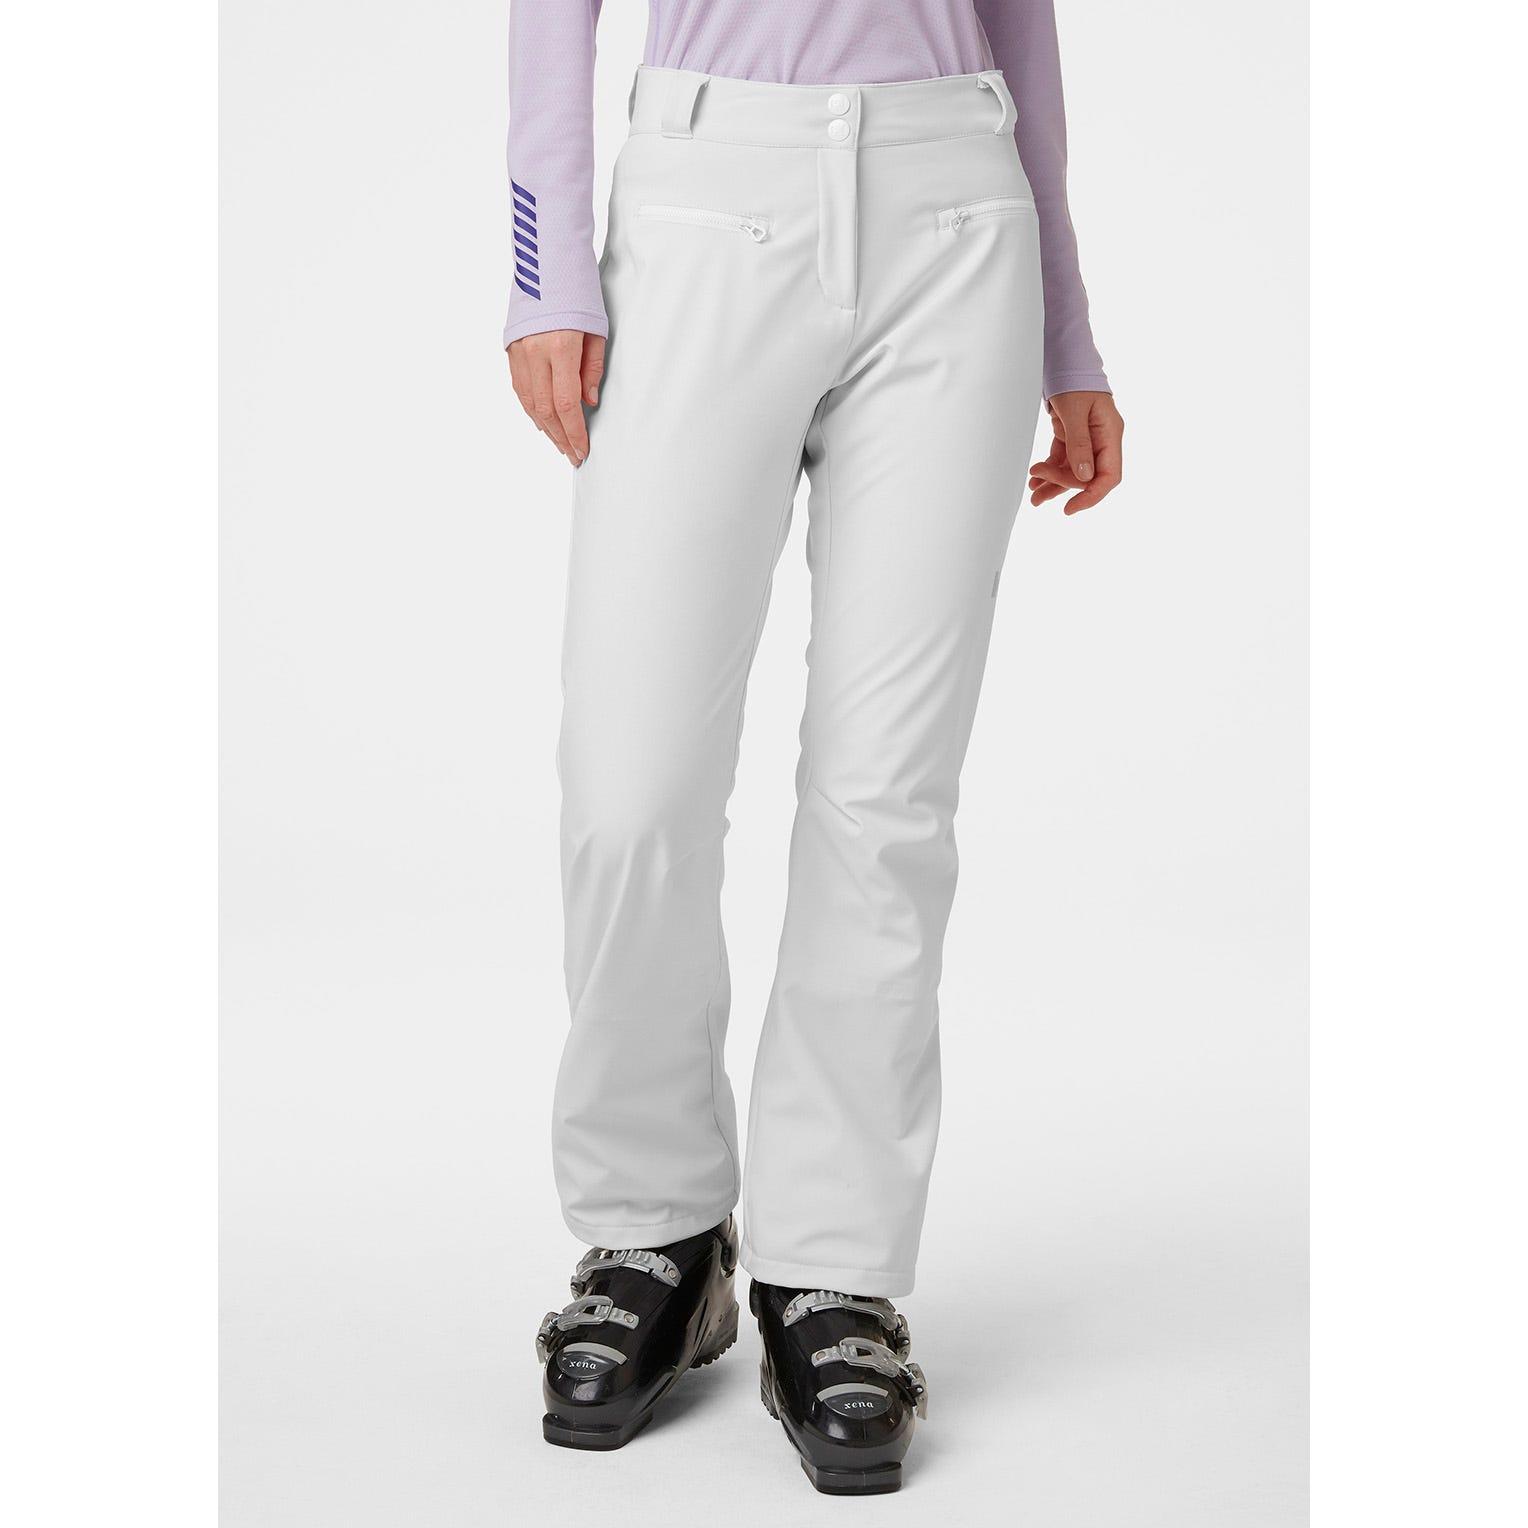 helly hansen purple ski pants, major sale 81% off - www.wingspantg.com